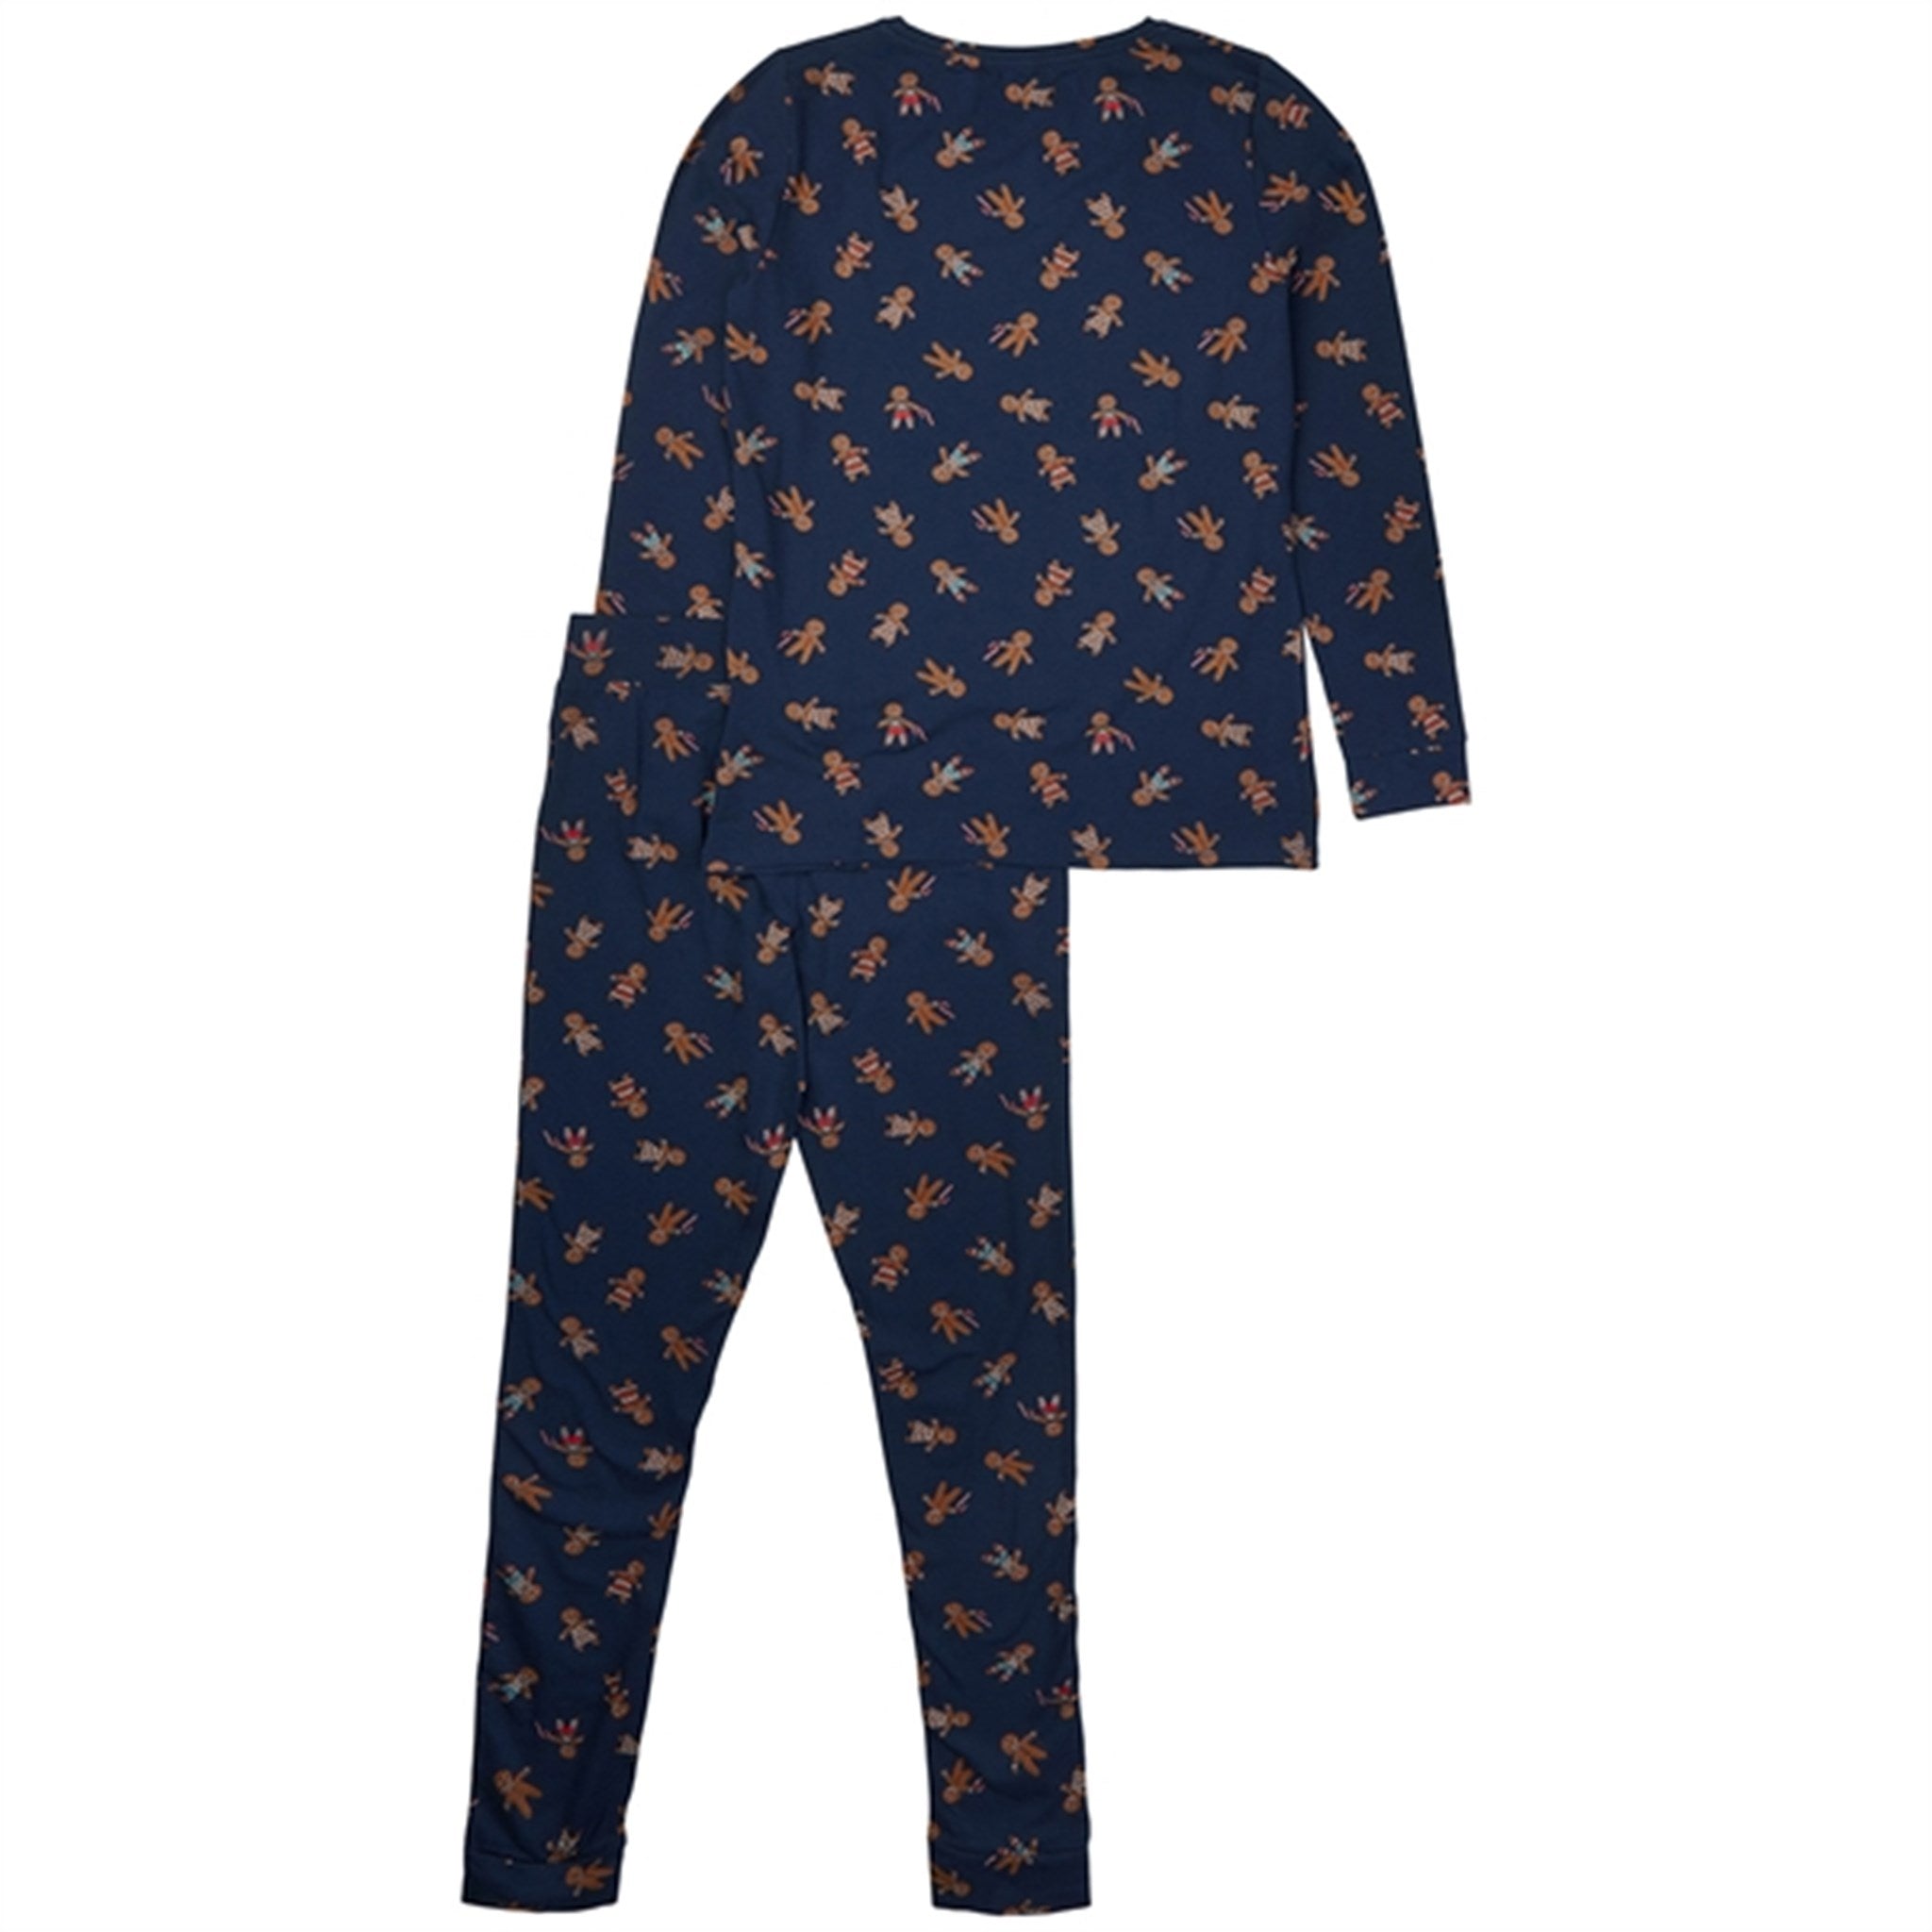 The New Navy Blazer Ginger Aop Holiday Pyjamas Voksen 2